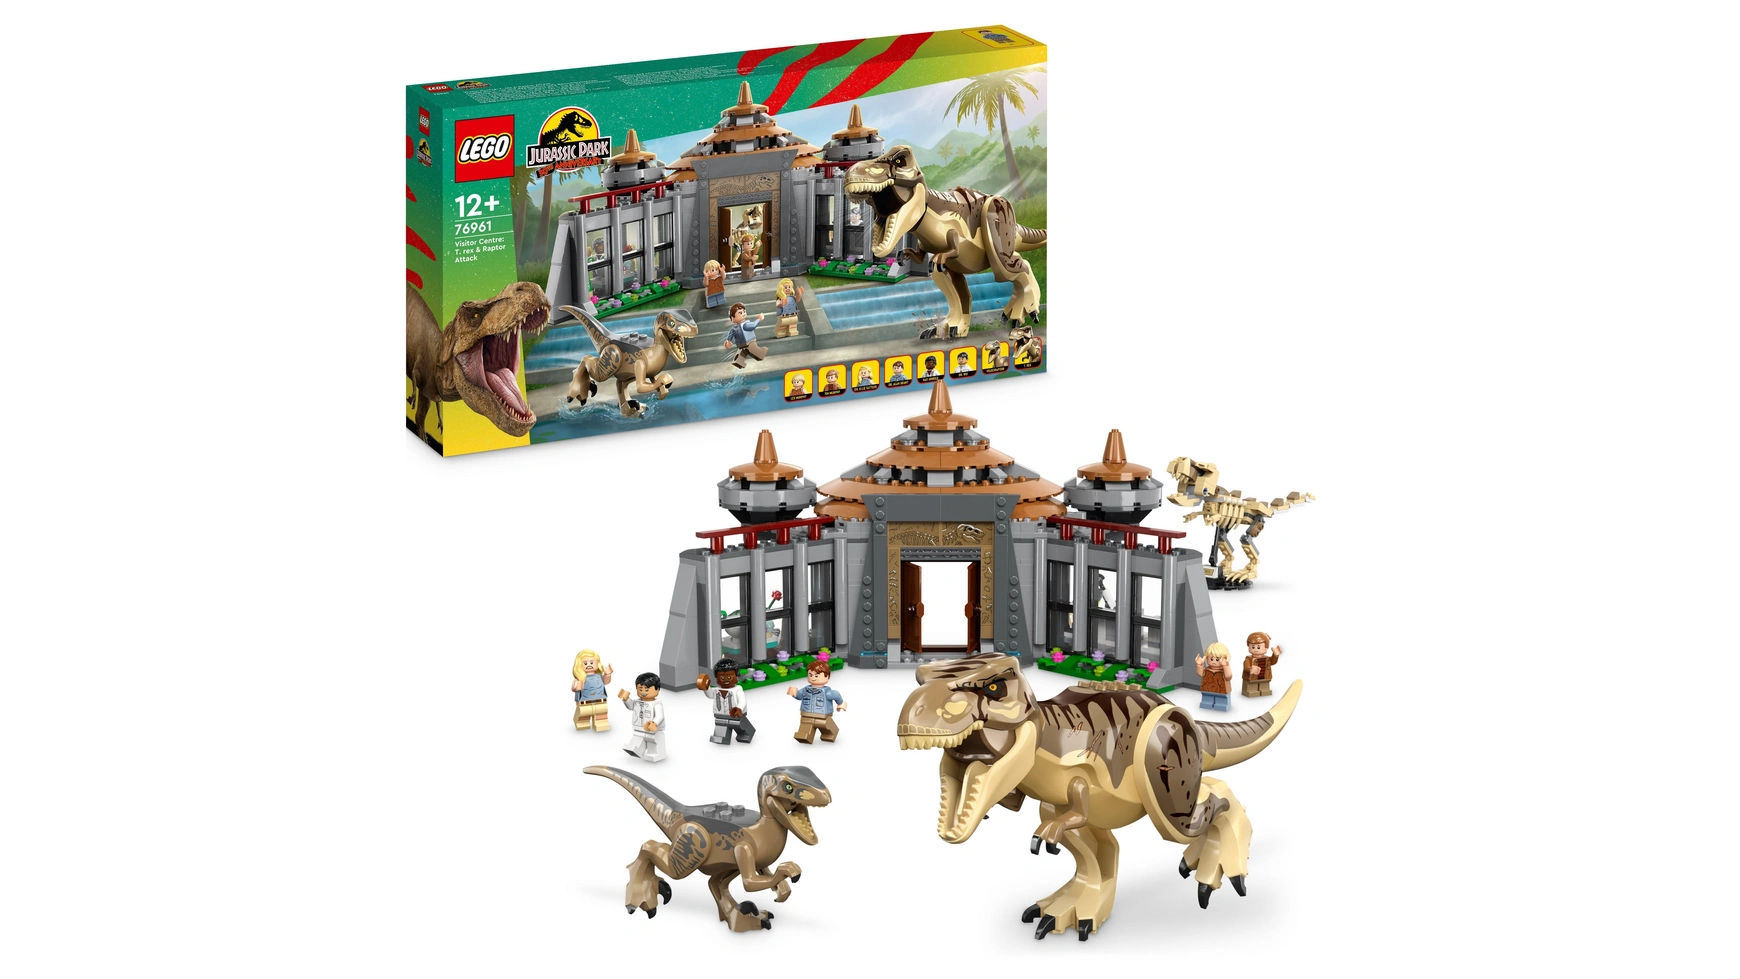 Lego Jurassic Park Ти-рекс и хищник нападают на центр для посетителей